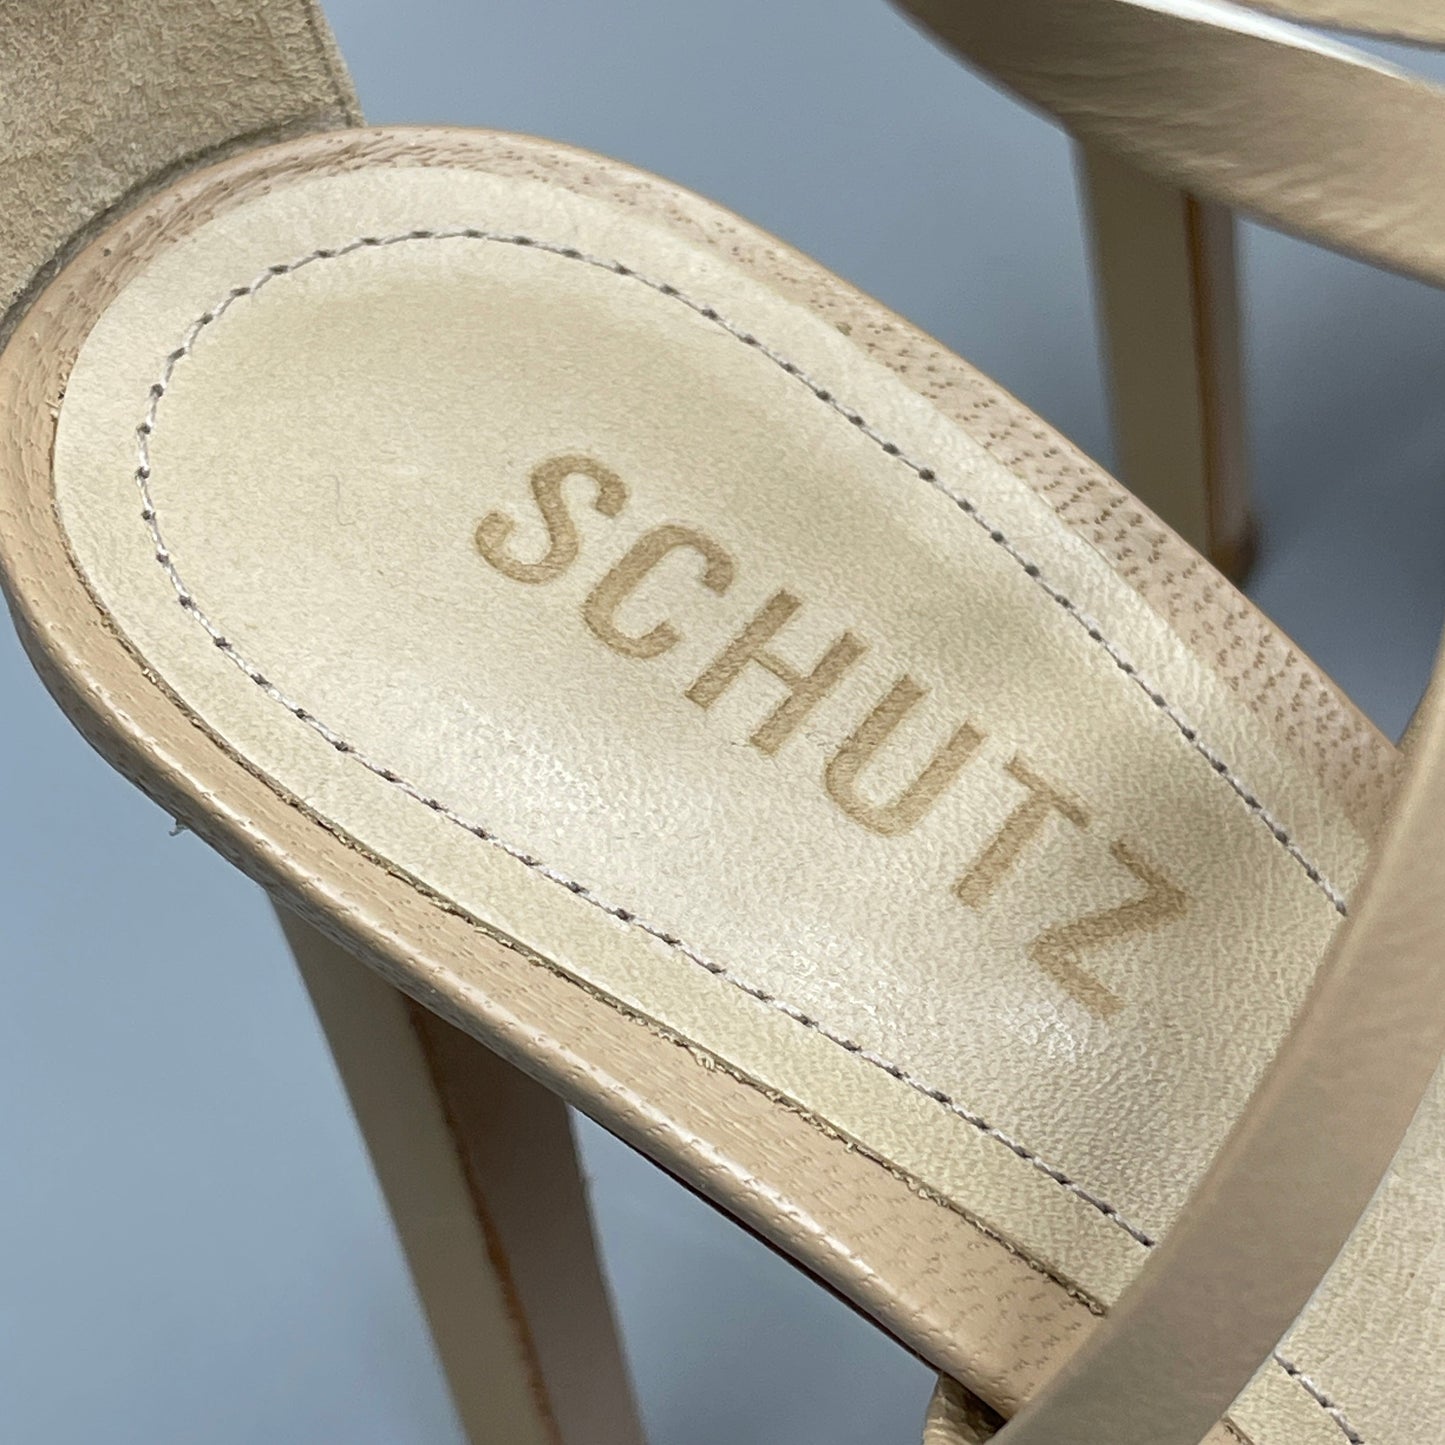 SCHUTZ Bryce Ankle Tie Women's Leather High Heel Sandal Light Nude Sz 7.5B (New)